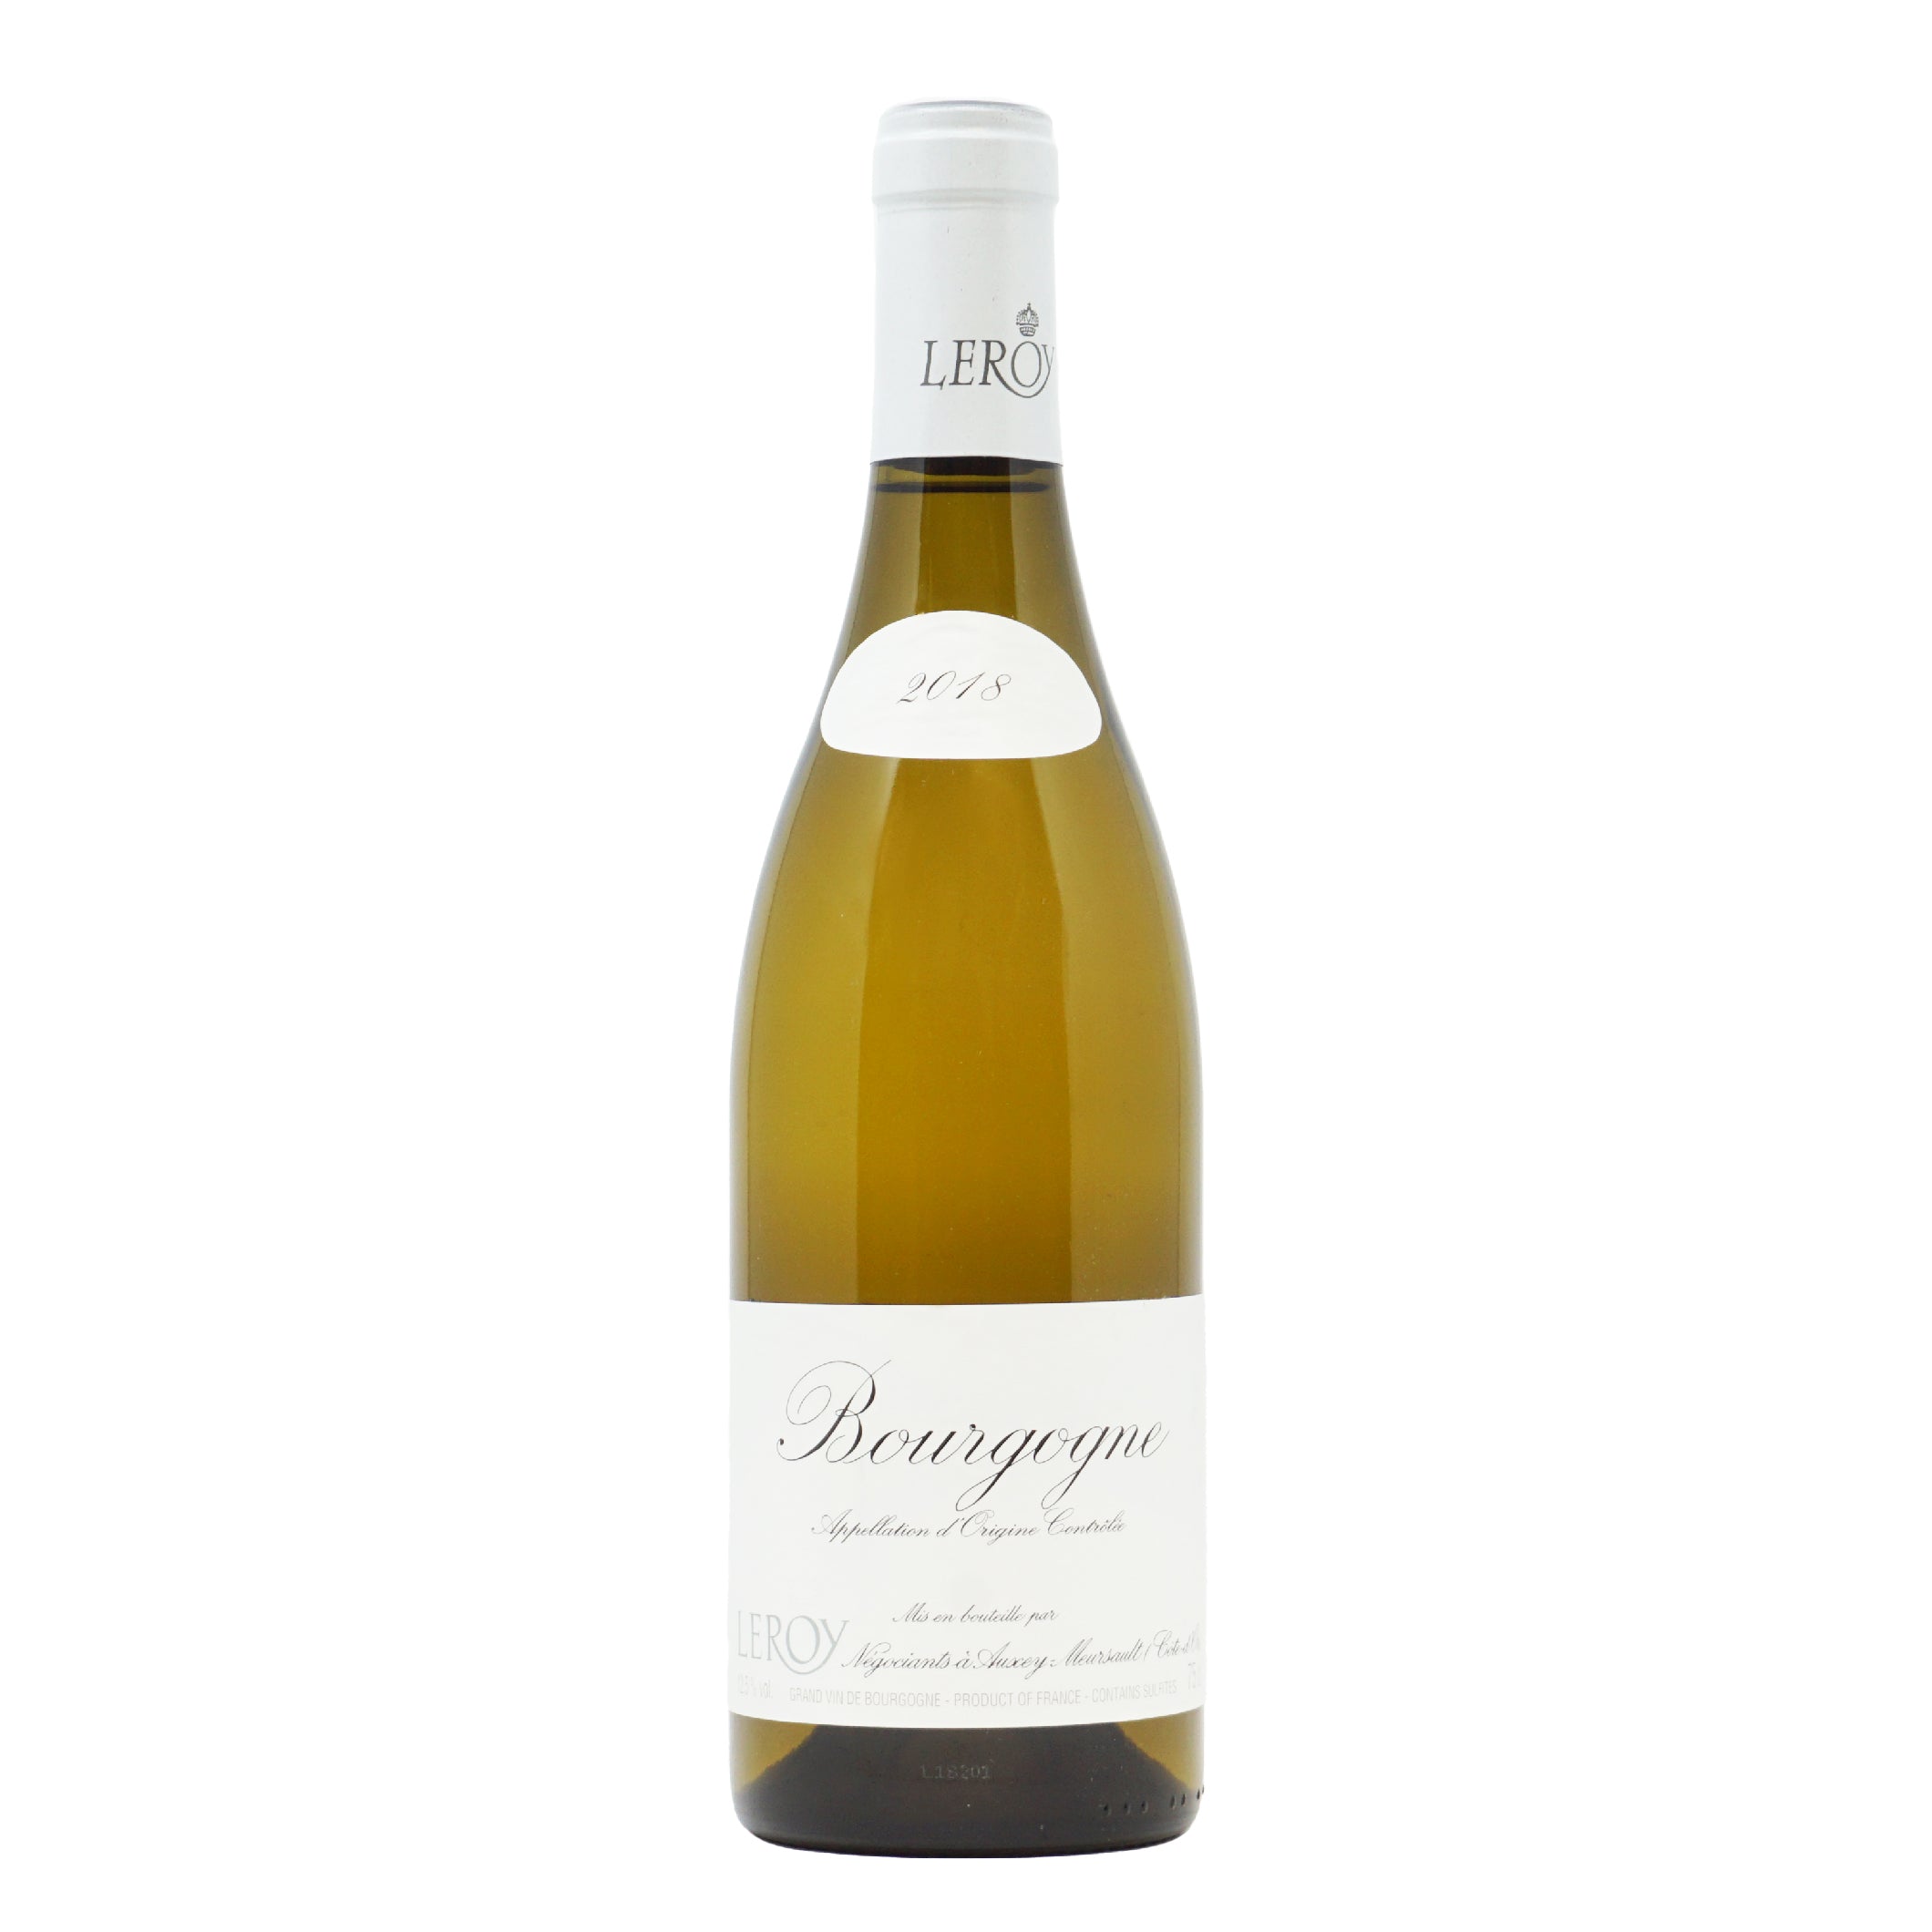 Bourgogne Blanc 2018 Leroy Negociant lt.0.750